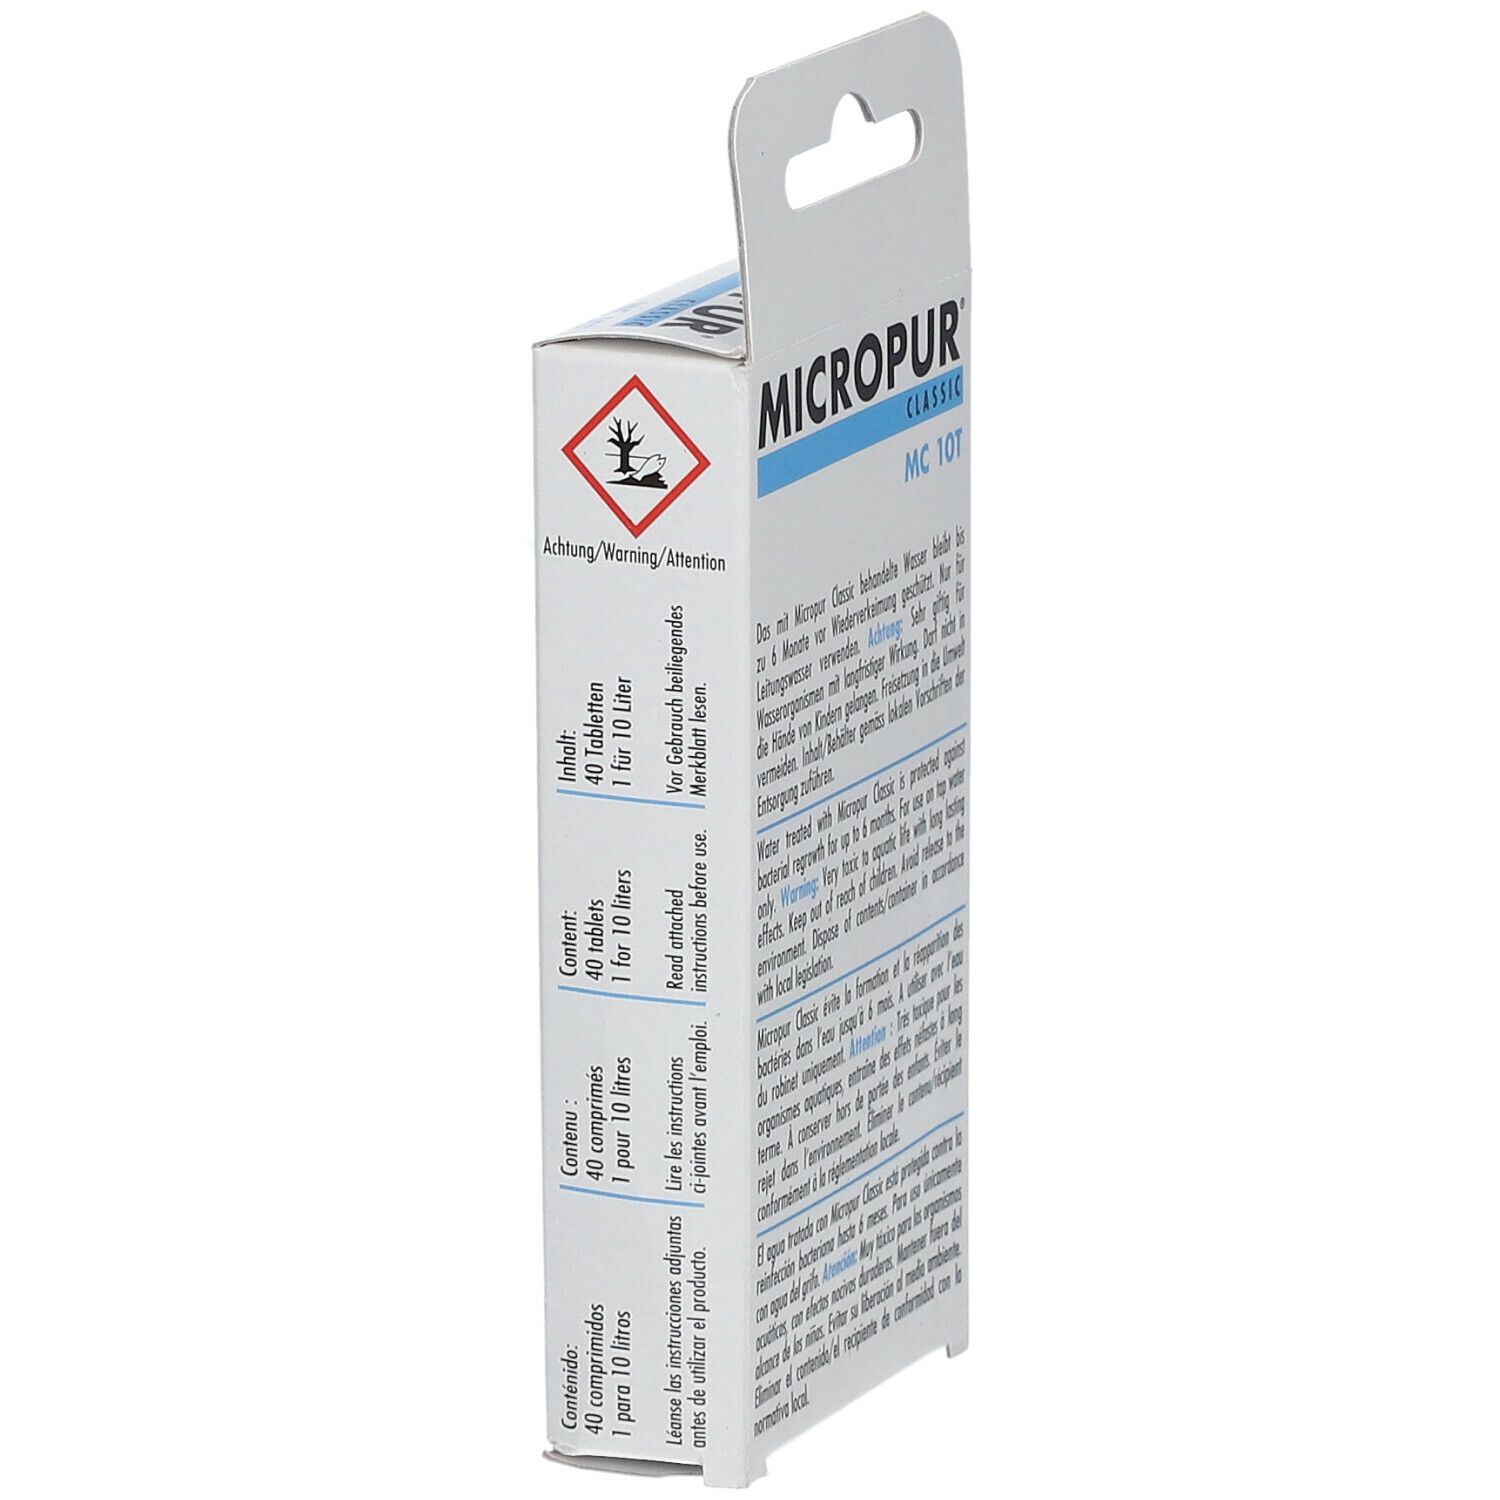 Micropur® Classic MC 10T